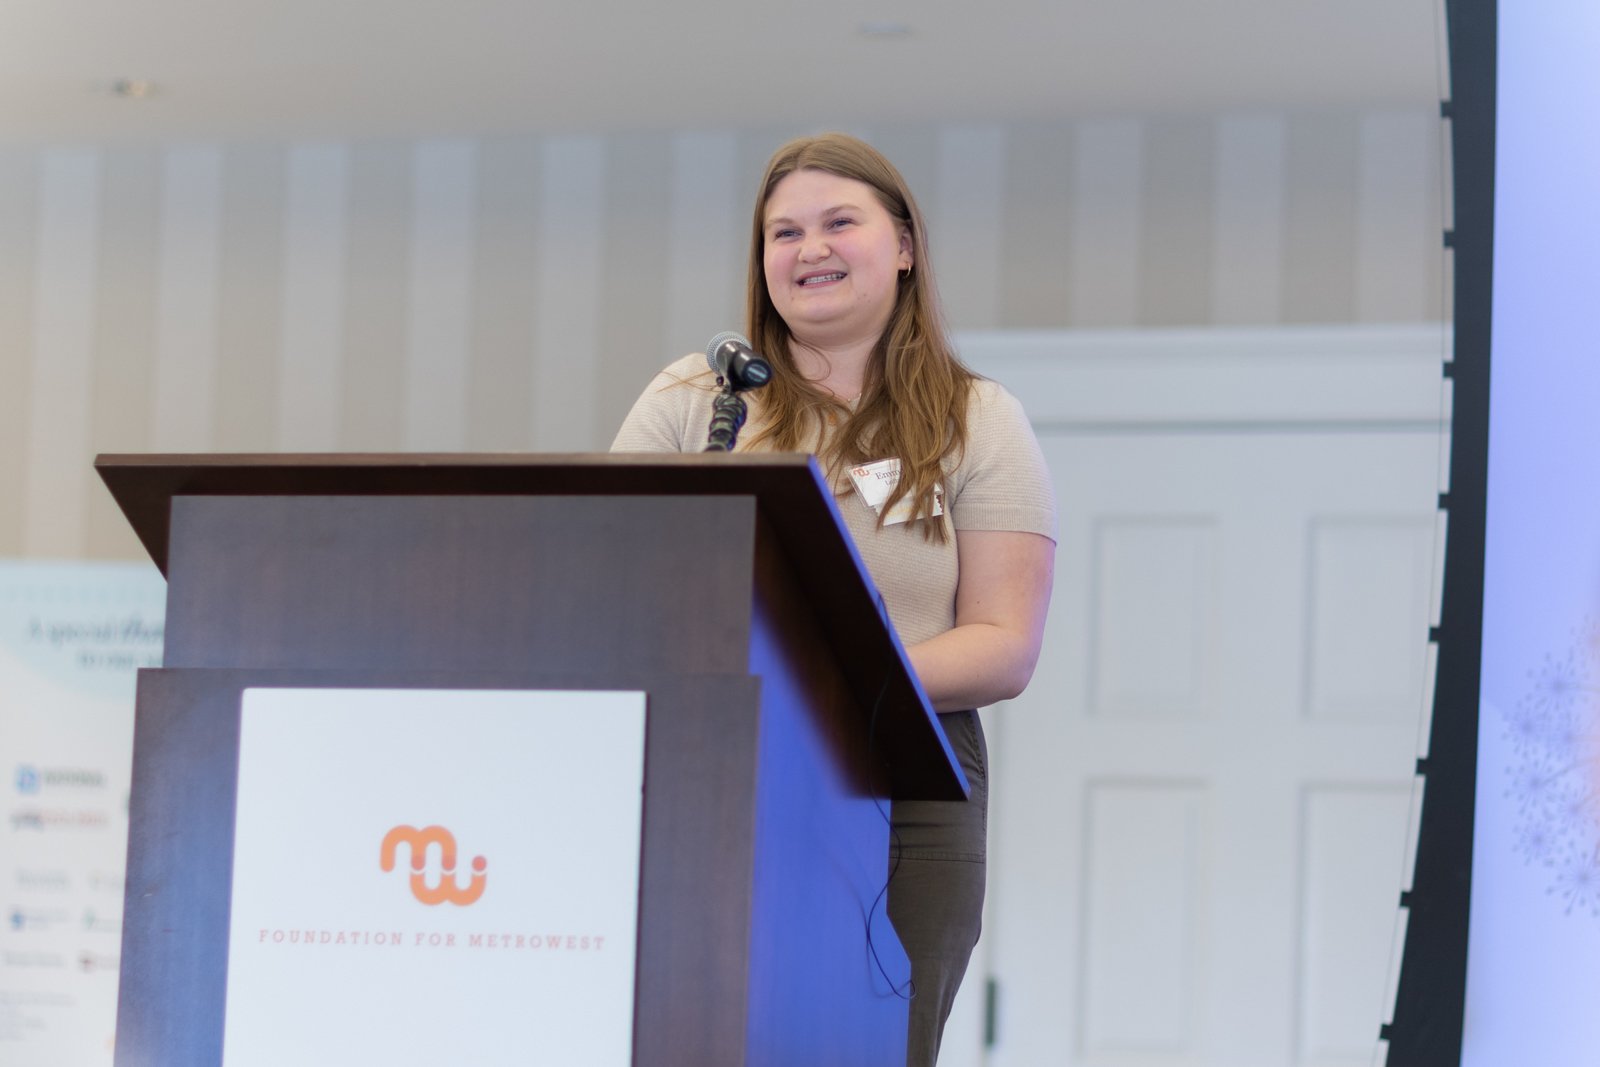 Young Philanthropist Honoree Emma Loftus’s Remarks